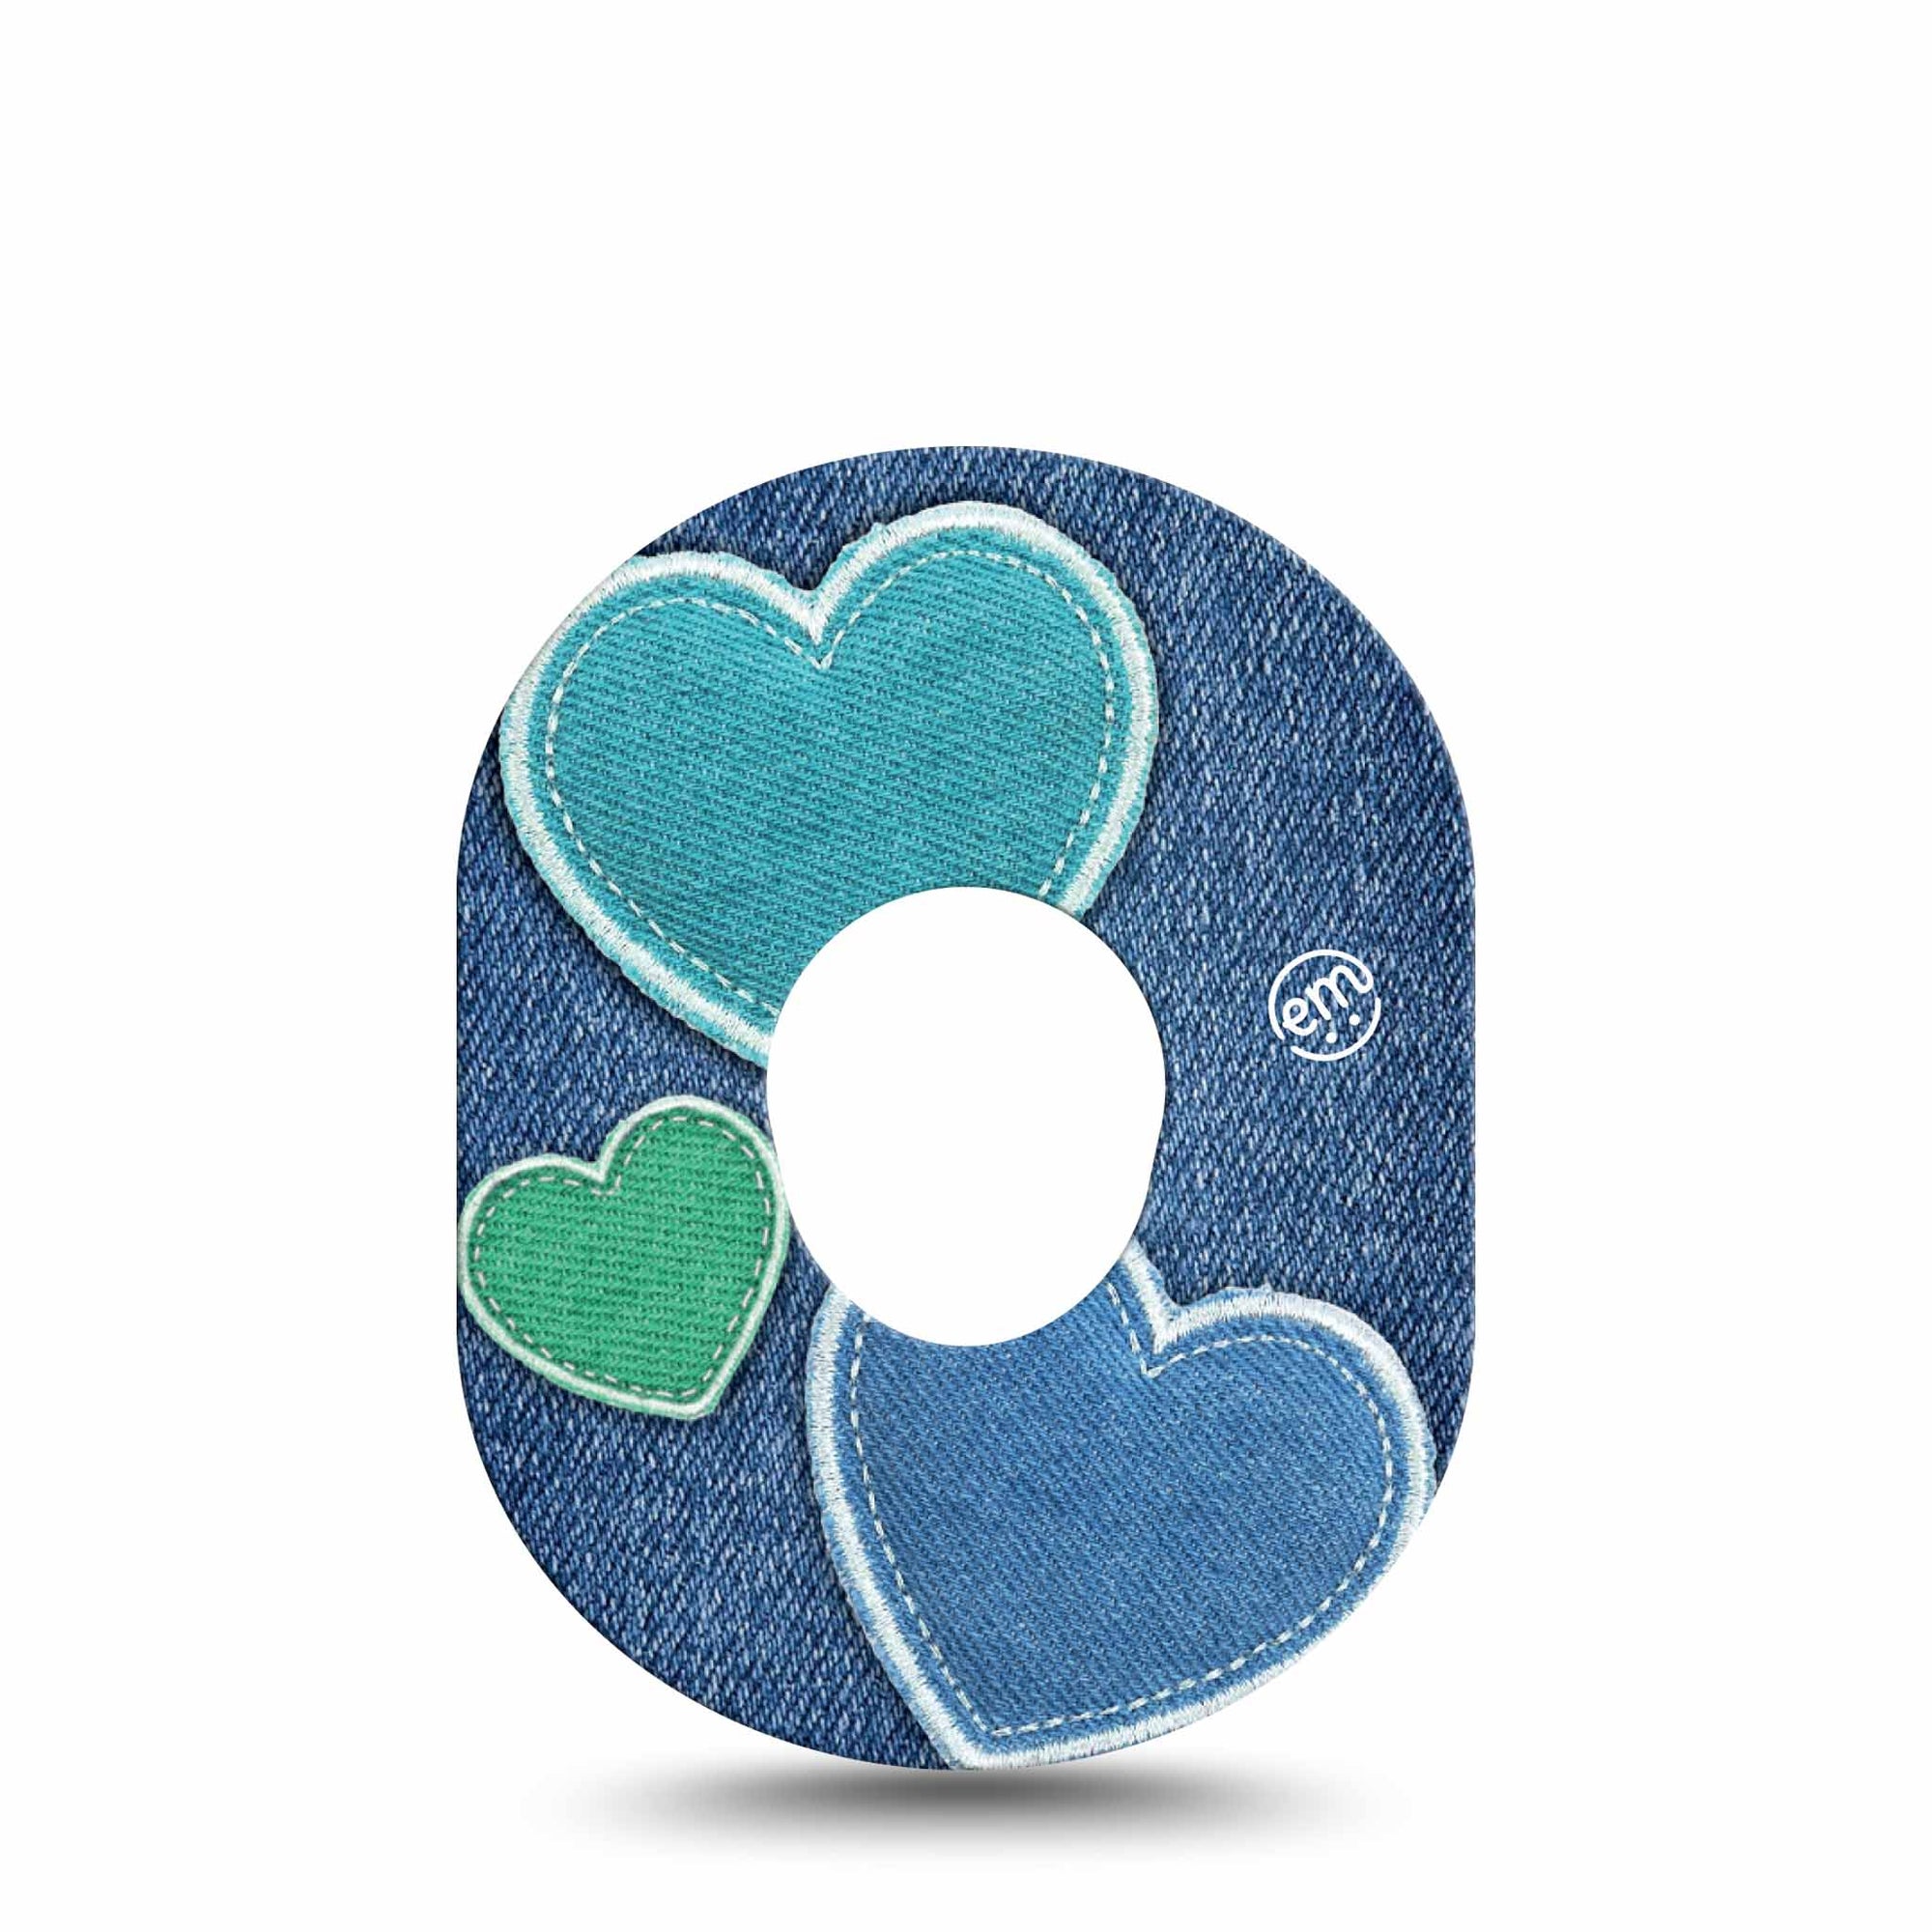 ExpressionMed Denim Hearts Dexcom G7 Tape, Single, Blue Hearts CGM Adhesive Patch Design